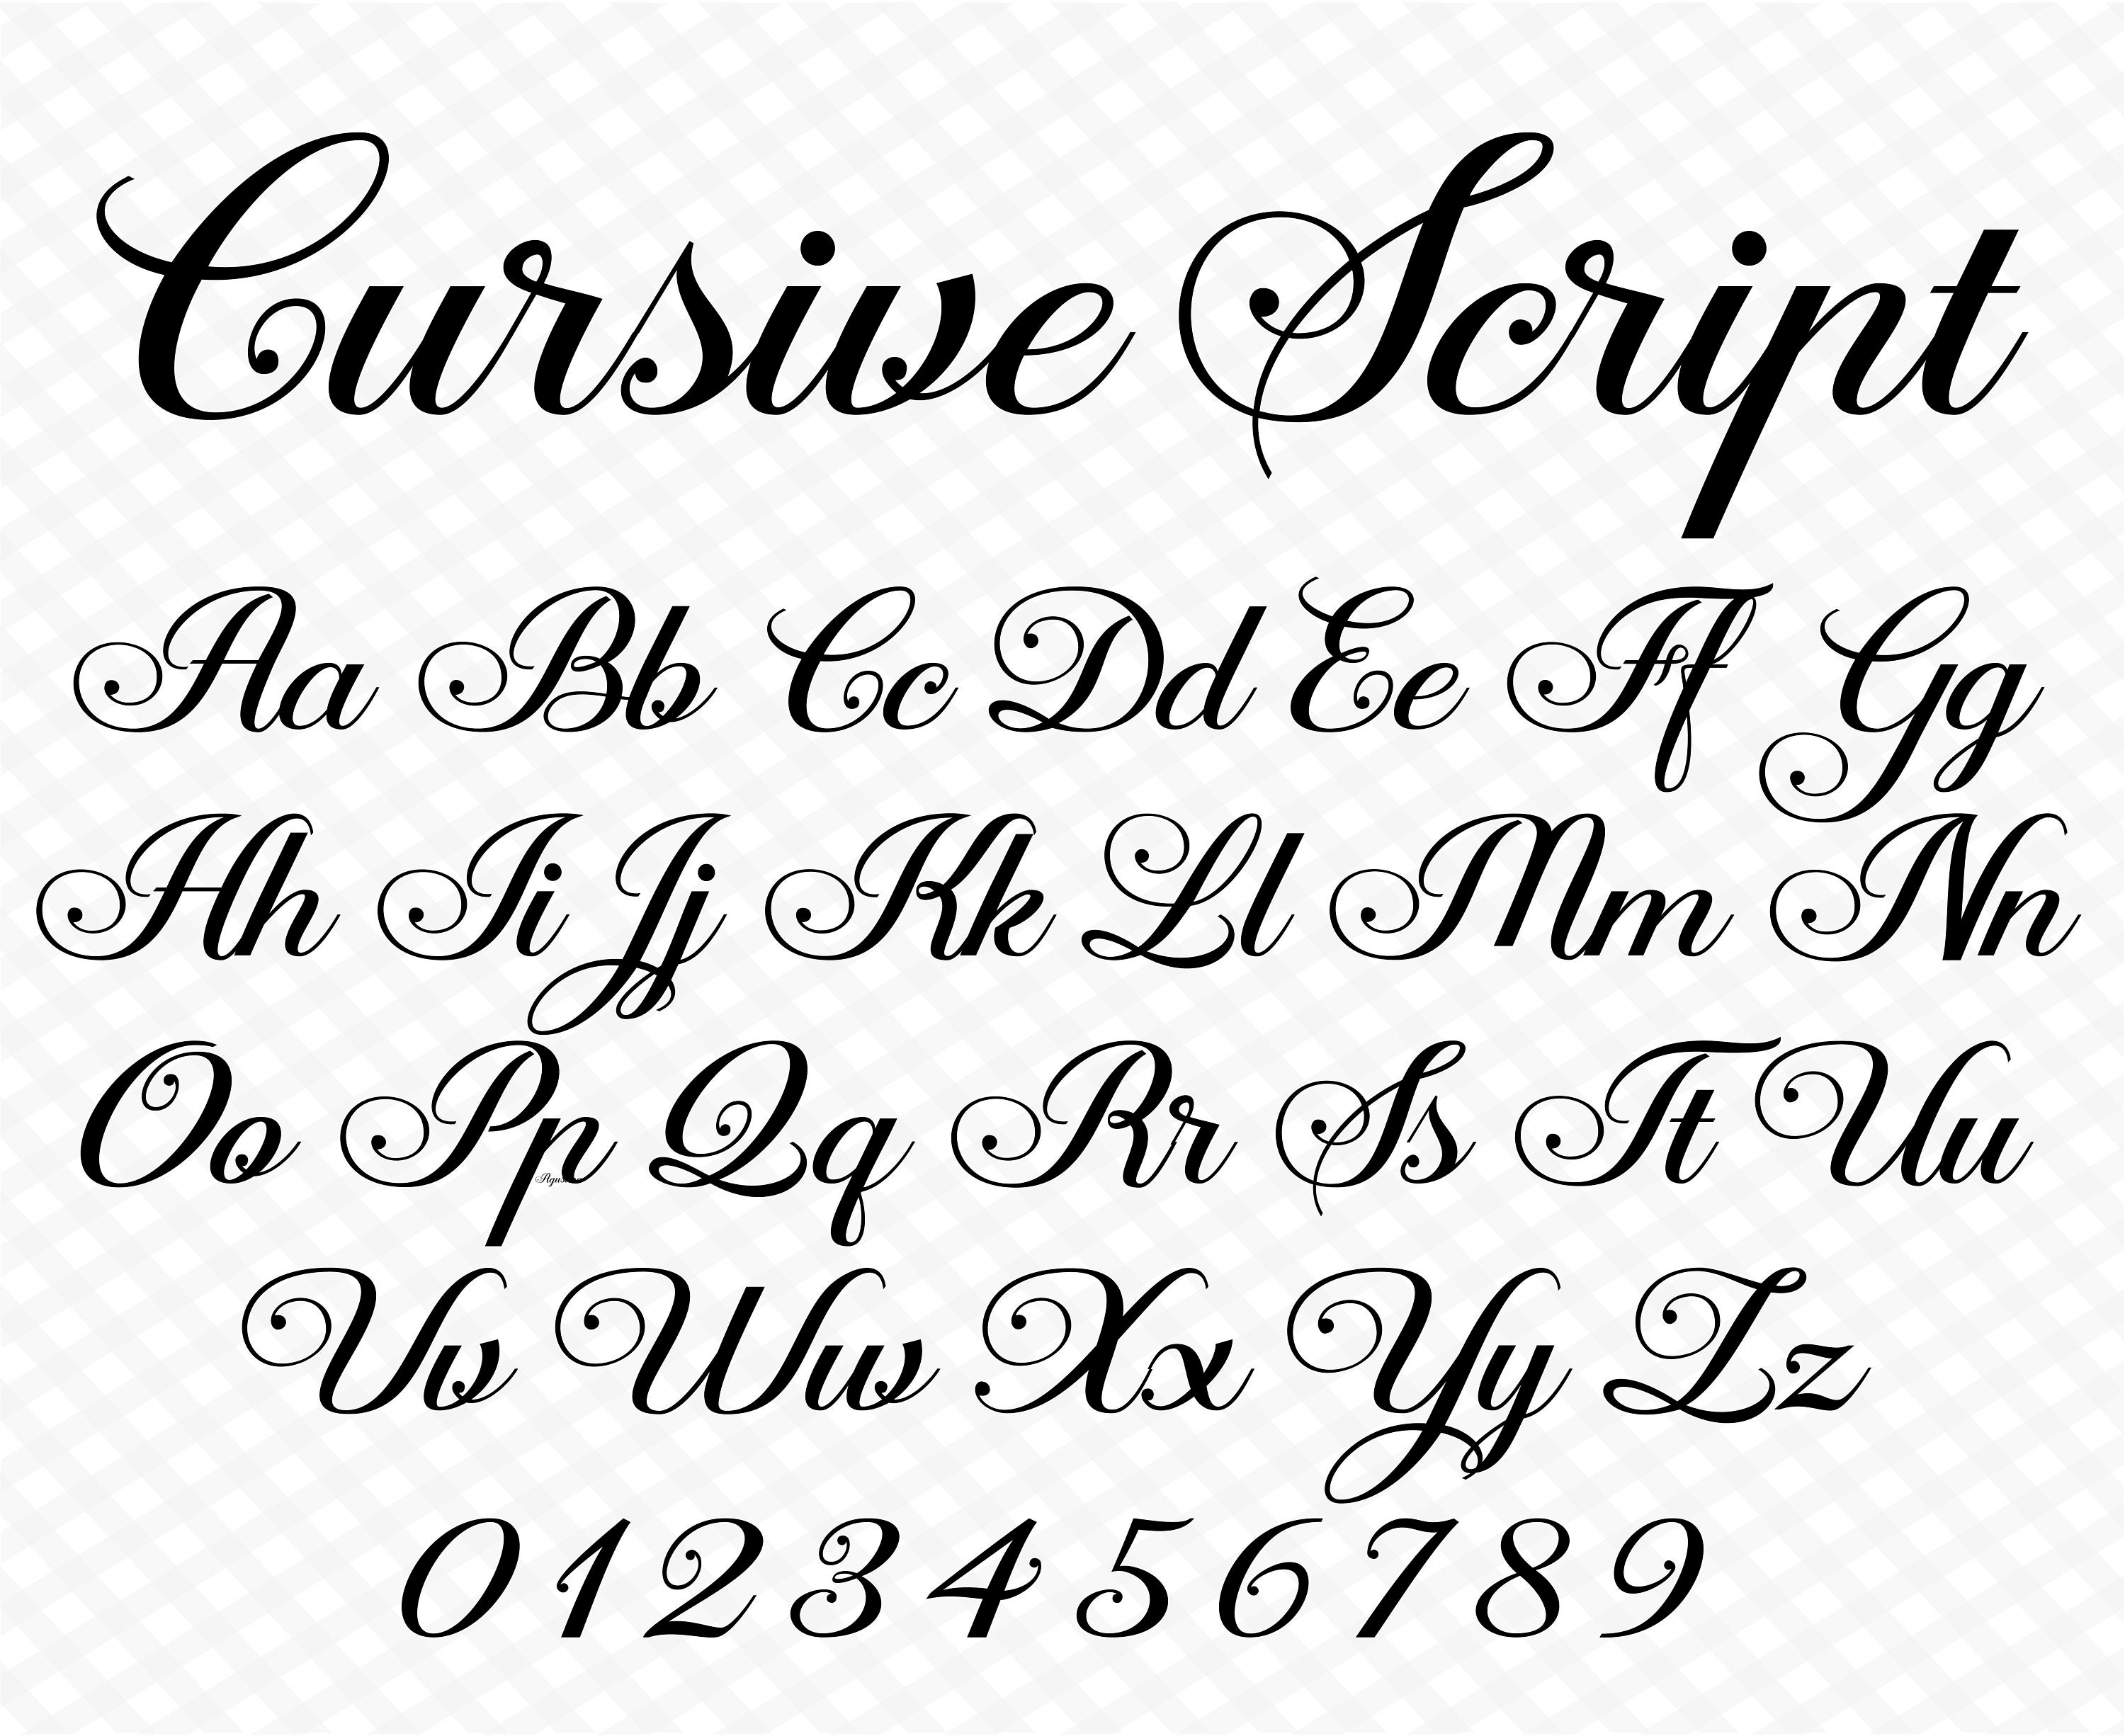 Letters In Cursive Font